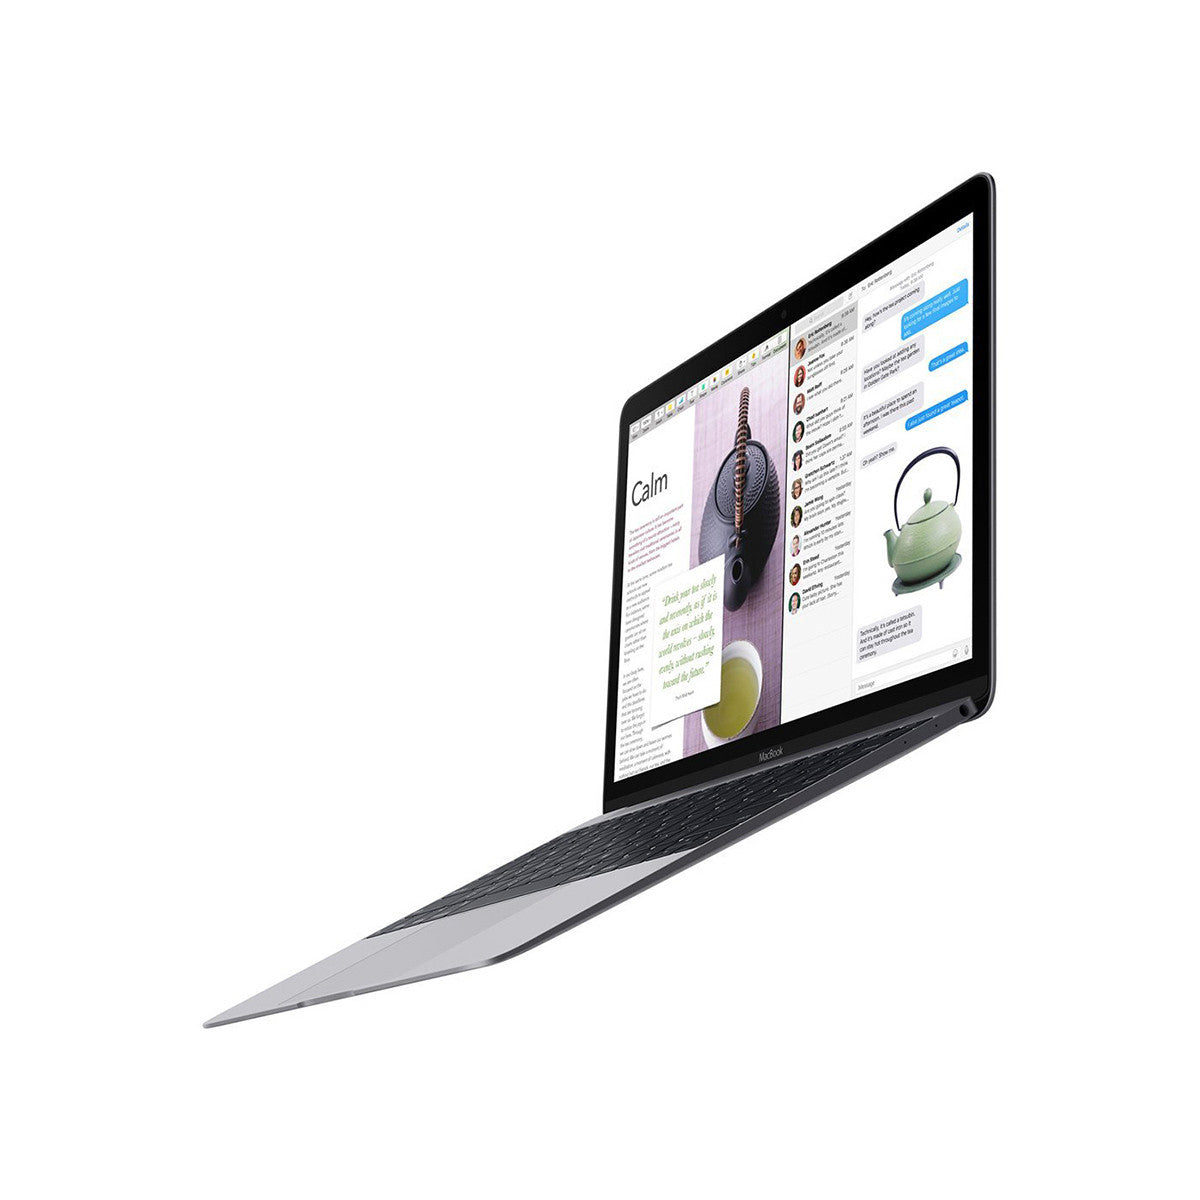 Apple Macbook Retina Display 12’’